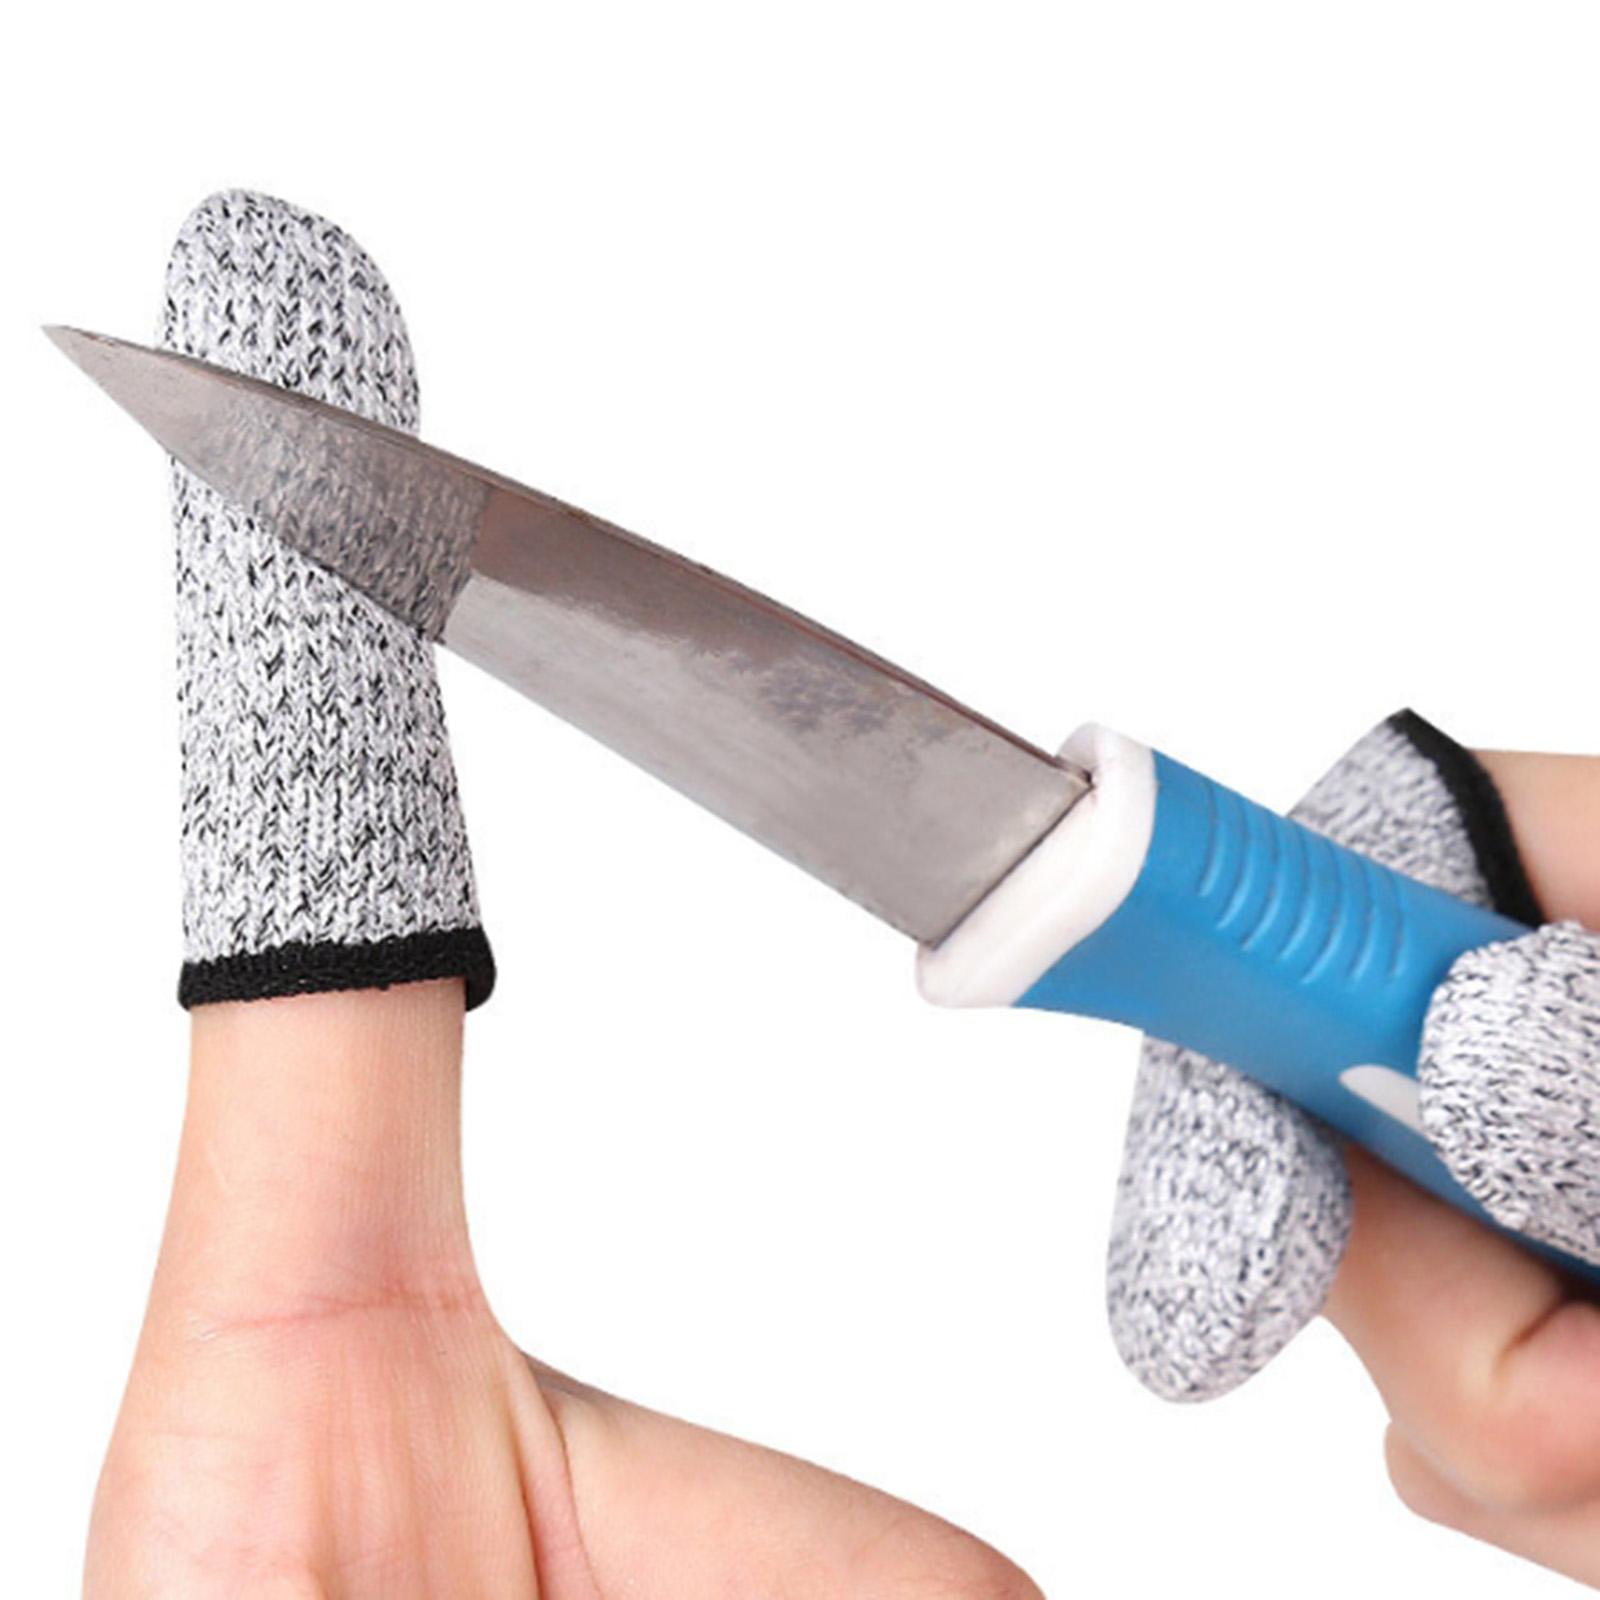 8pcs Reusable Finger Cots Cut Resistant Protection Fingertip Sleeves Caps Covers